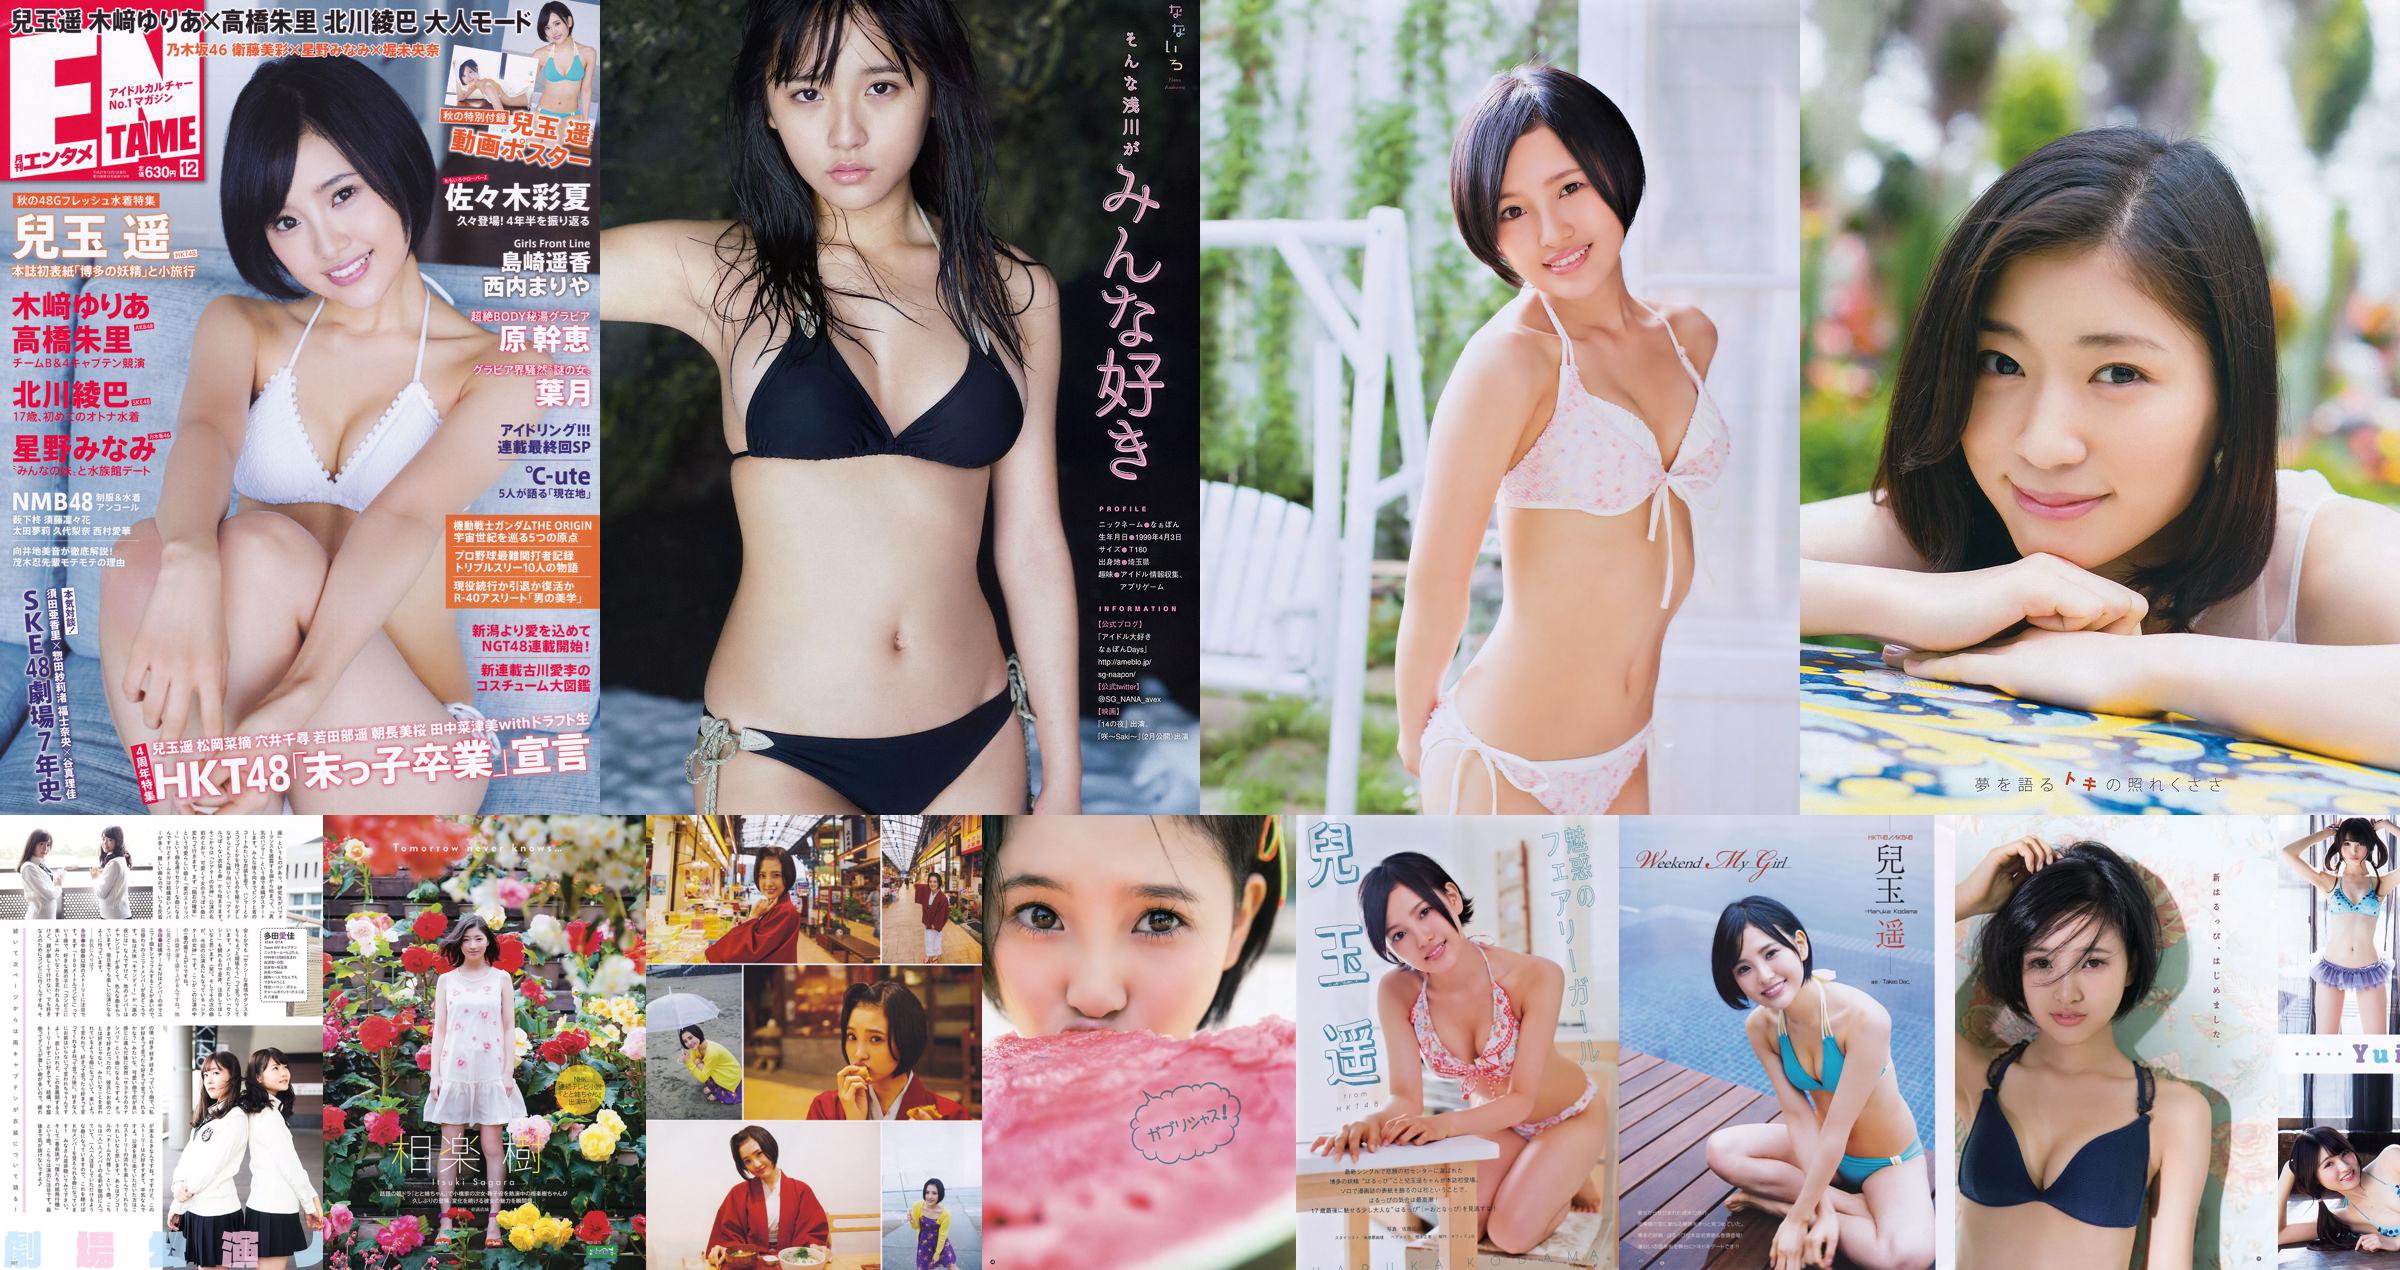 [Młody Gangan] Haruka Kodama Saki Takeda 2015 nr 12 Photo Palet No.963d40 Strona 1